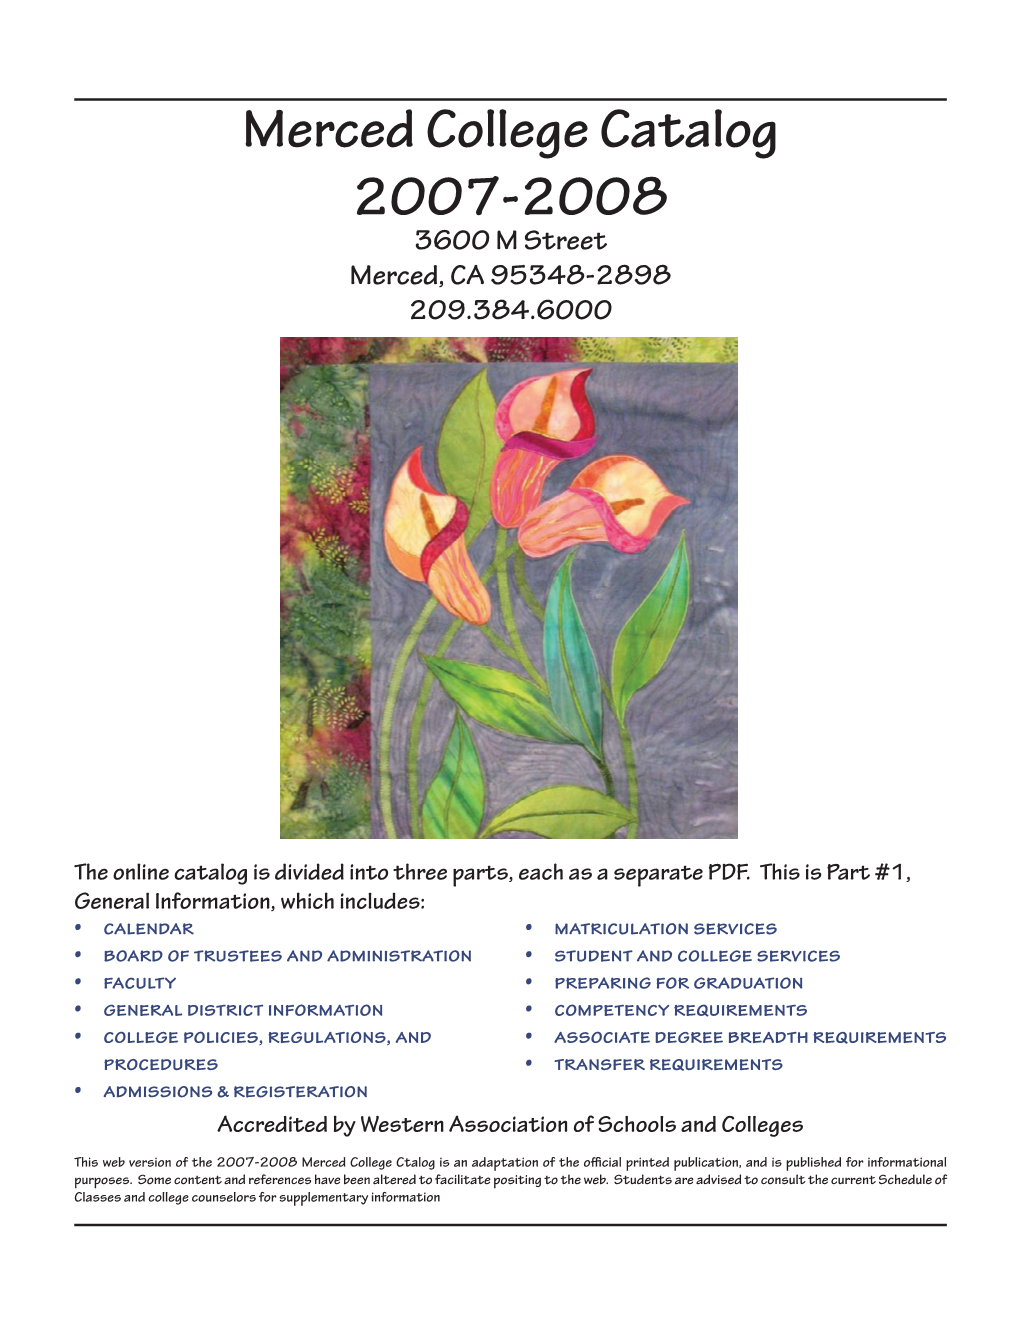 Merced College 2007-2008 Catalog